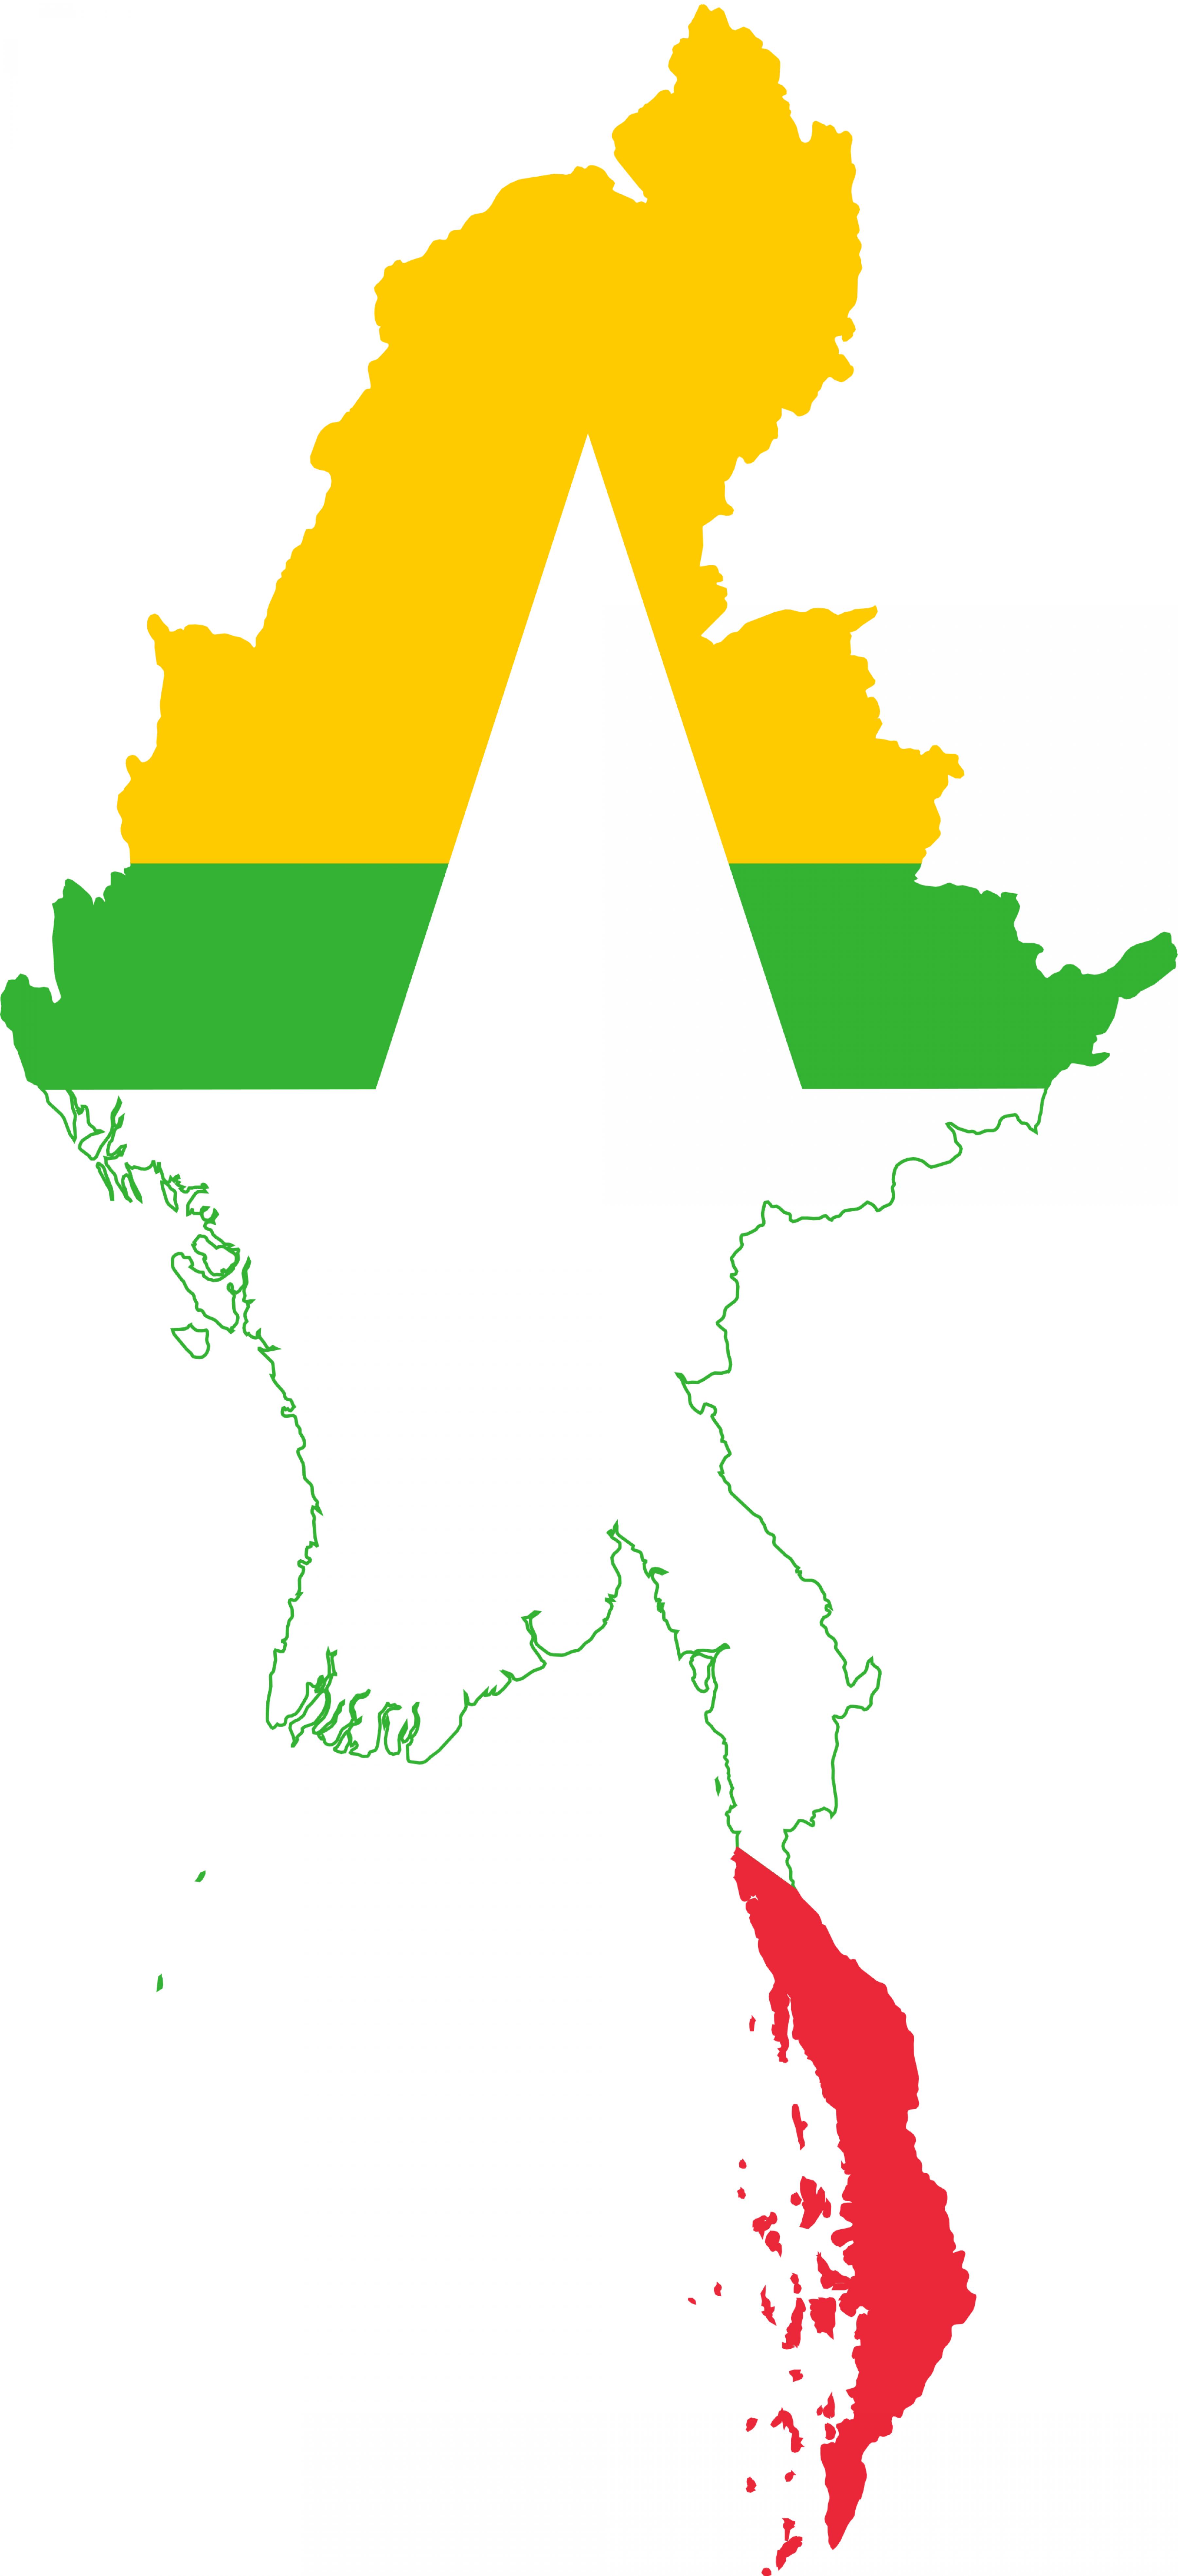 Myanmar Logo - Myanmar map logo - Map of Myanmar logo (South-Eastern Asia - Asia)